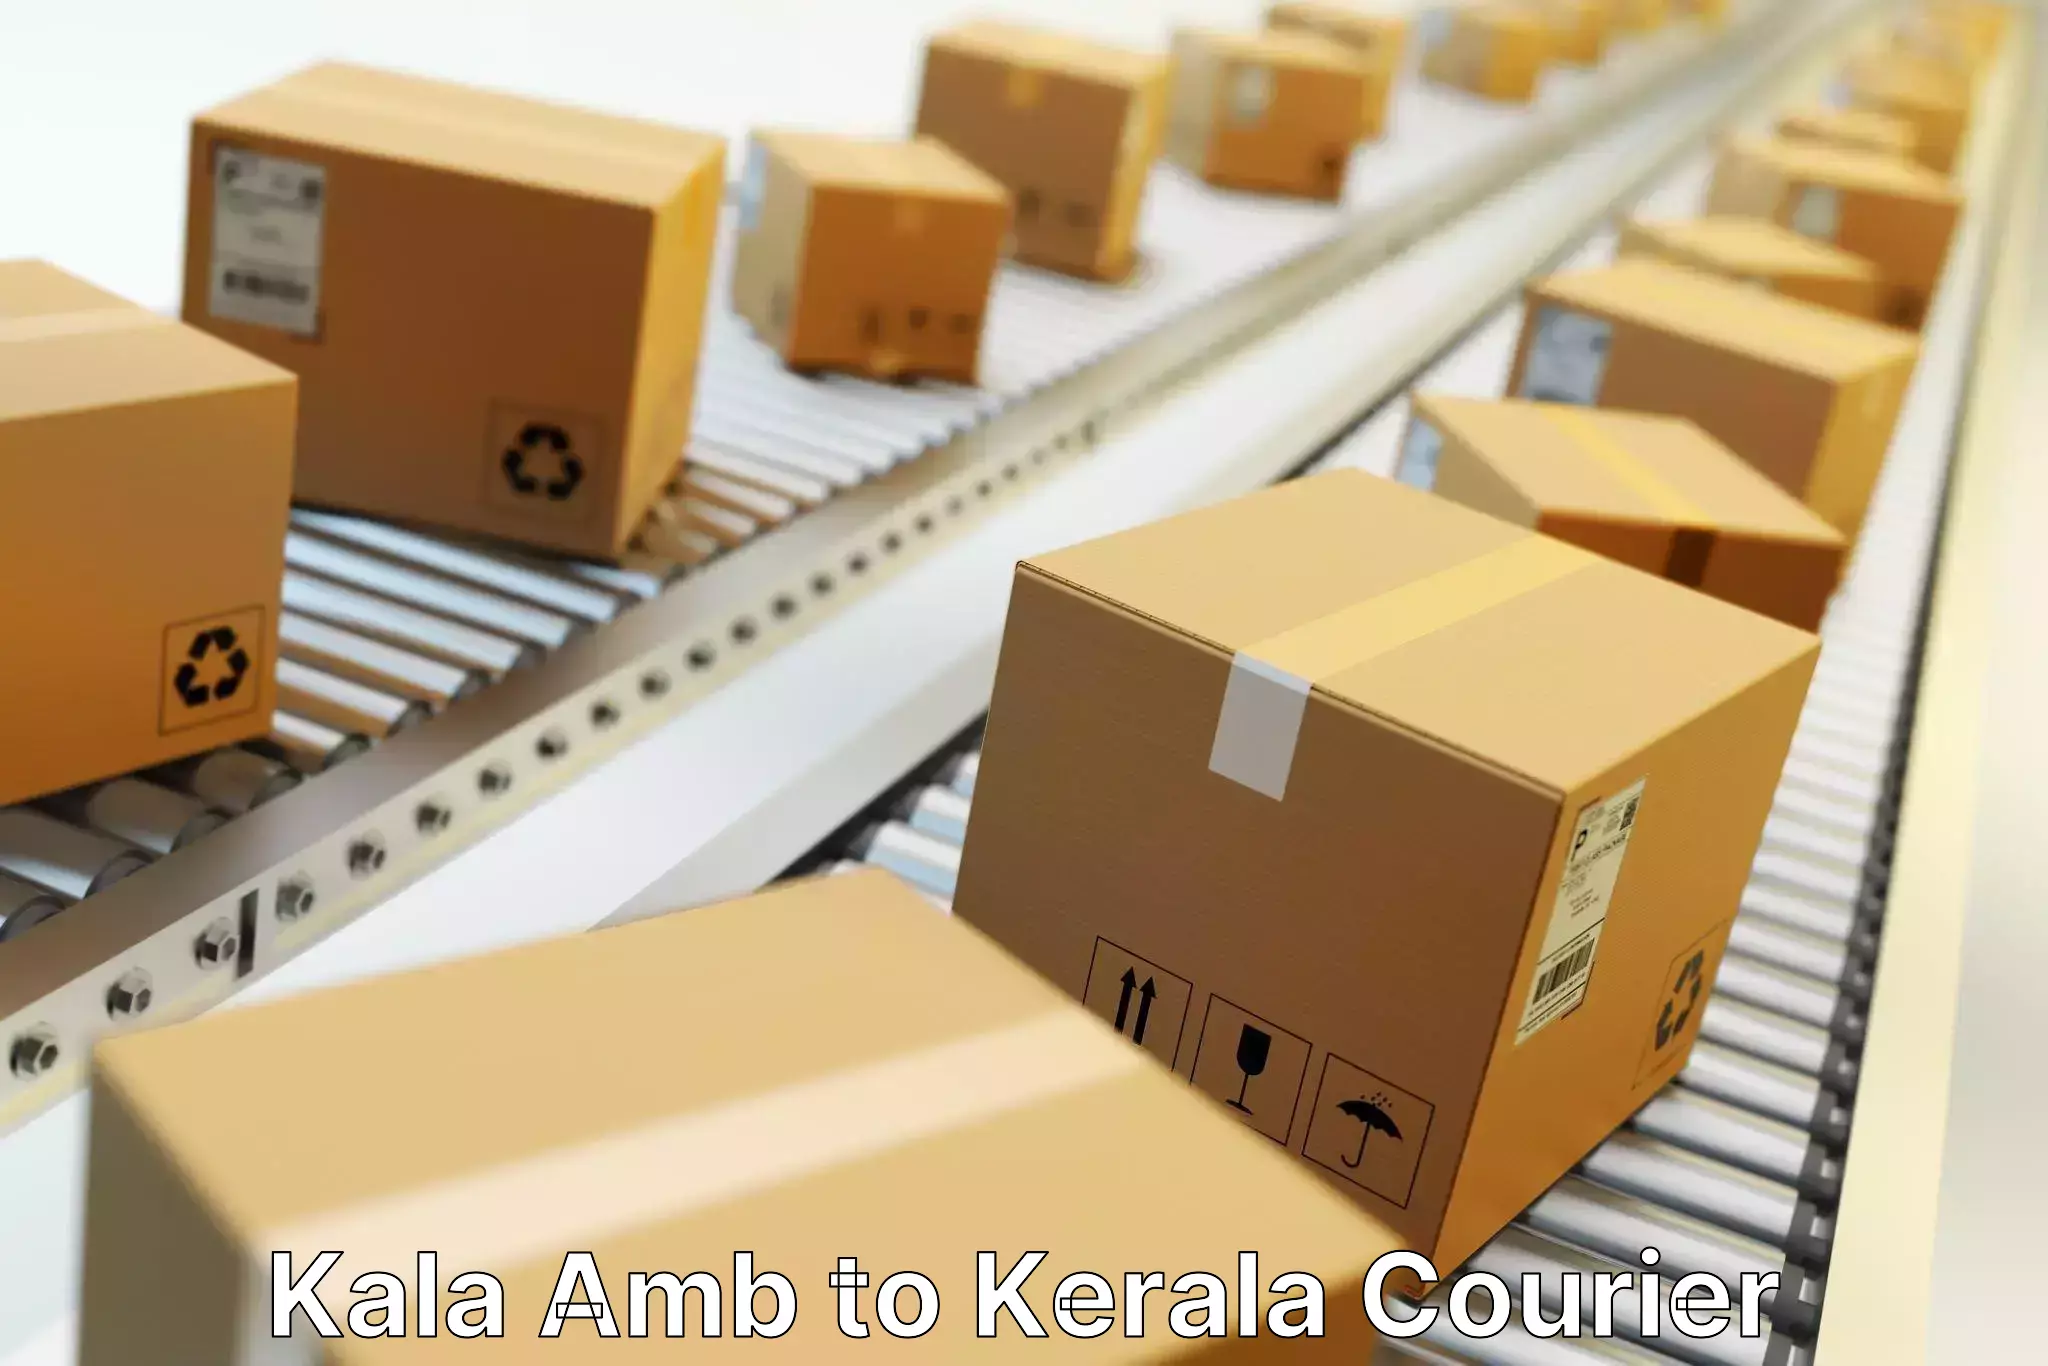 Express delivery capabilities Kala Amb to Ernakulam